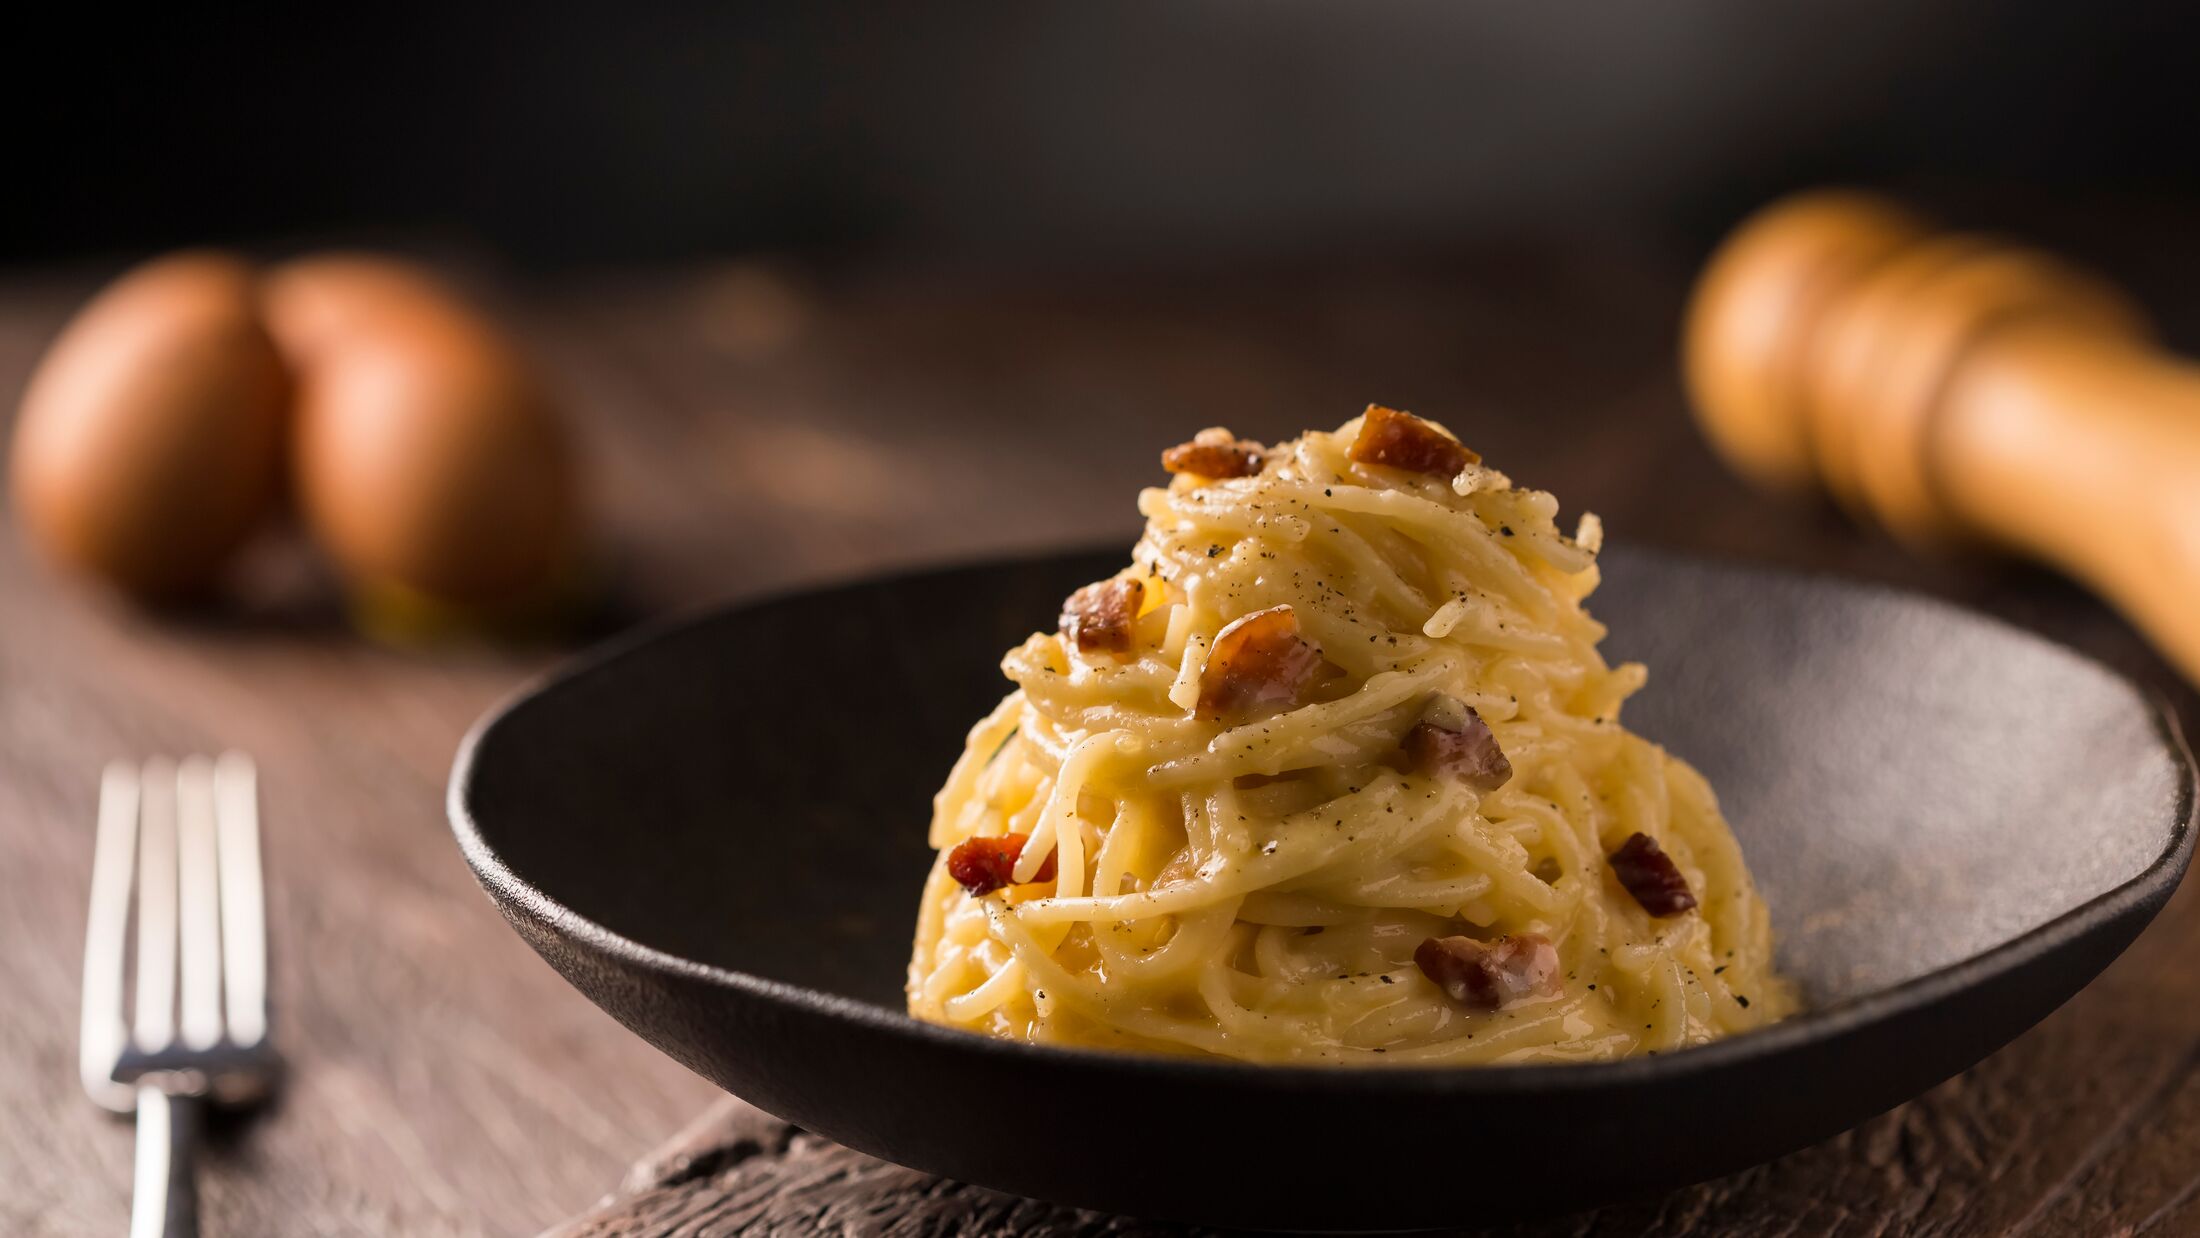 Homemade carbonara pasta. Italian traditional pasta (image with selective focus).